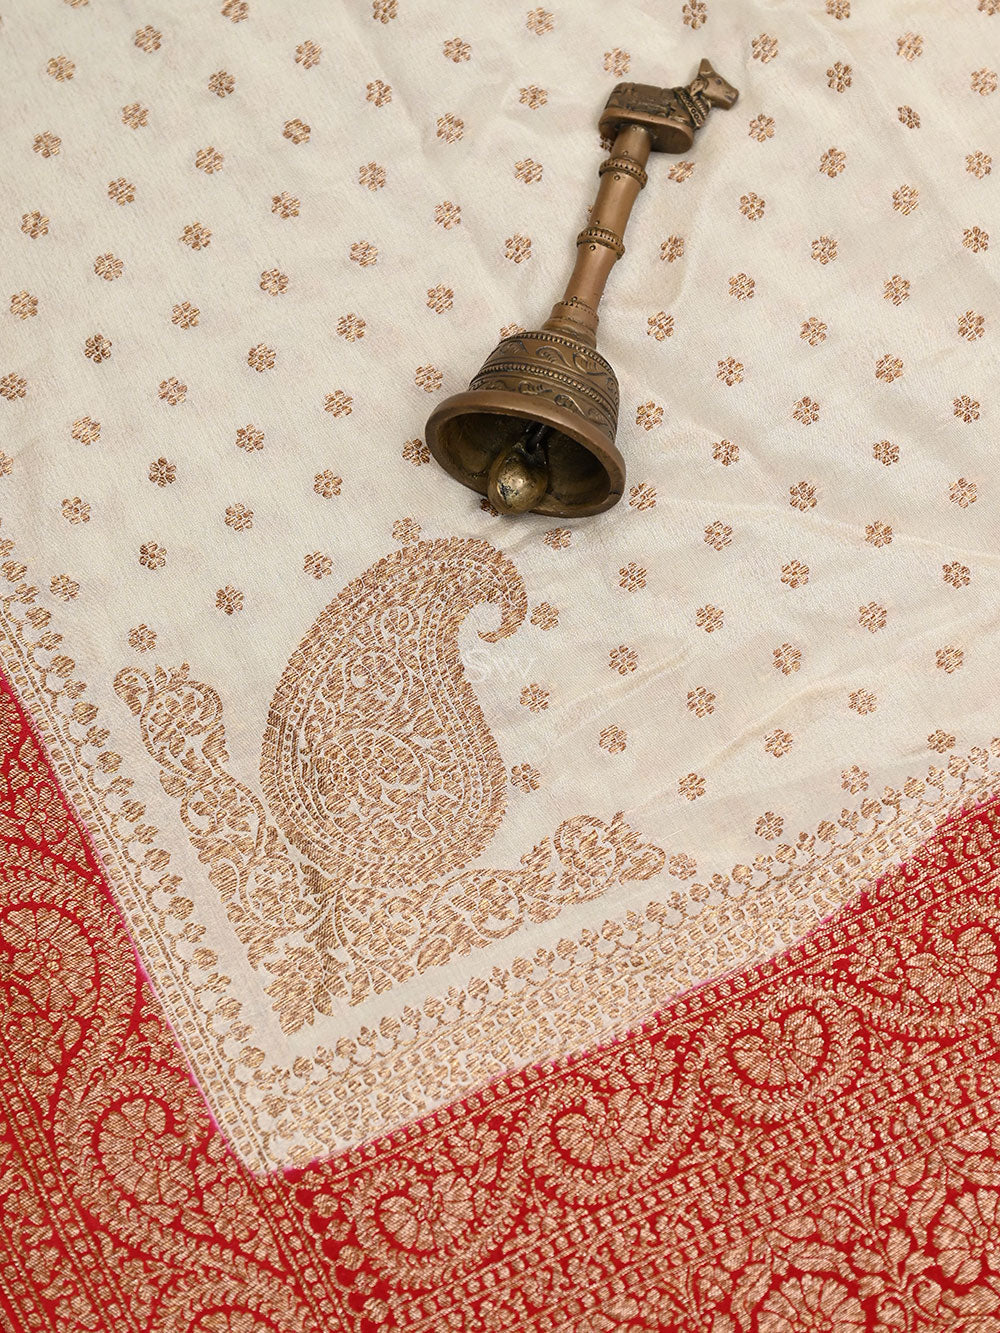 Off-White Konia Crepe Silk Booti Handloom Banarasi Saree - Sacred Weaves